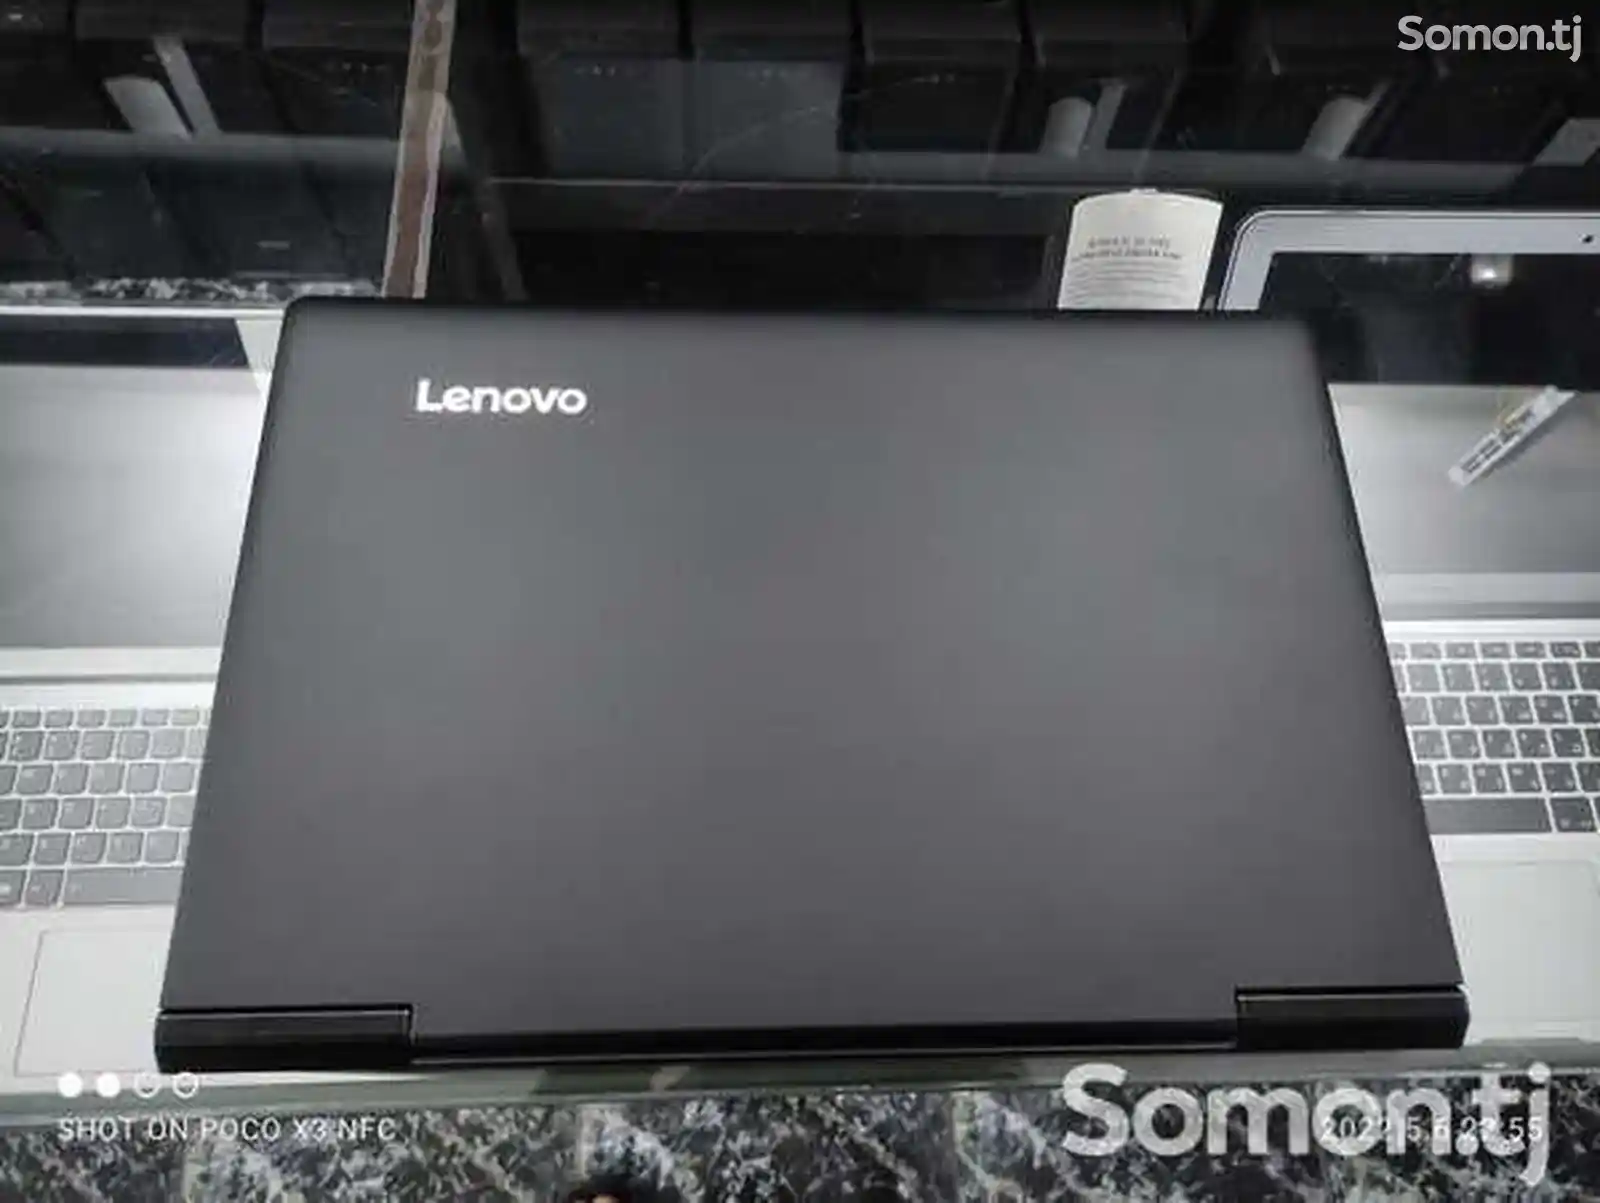 Игровой Ноутбук Lenovo 700 Gaming Core i5-6300HQ GTX 950M 4GB 6TH GEN-2